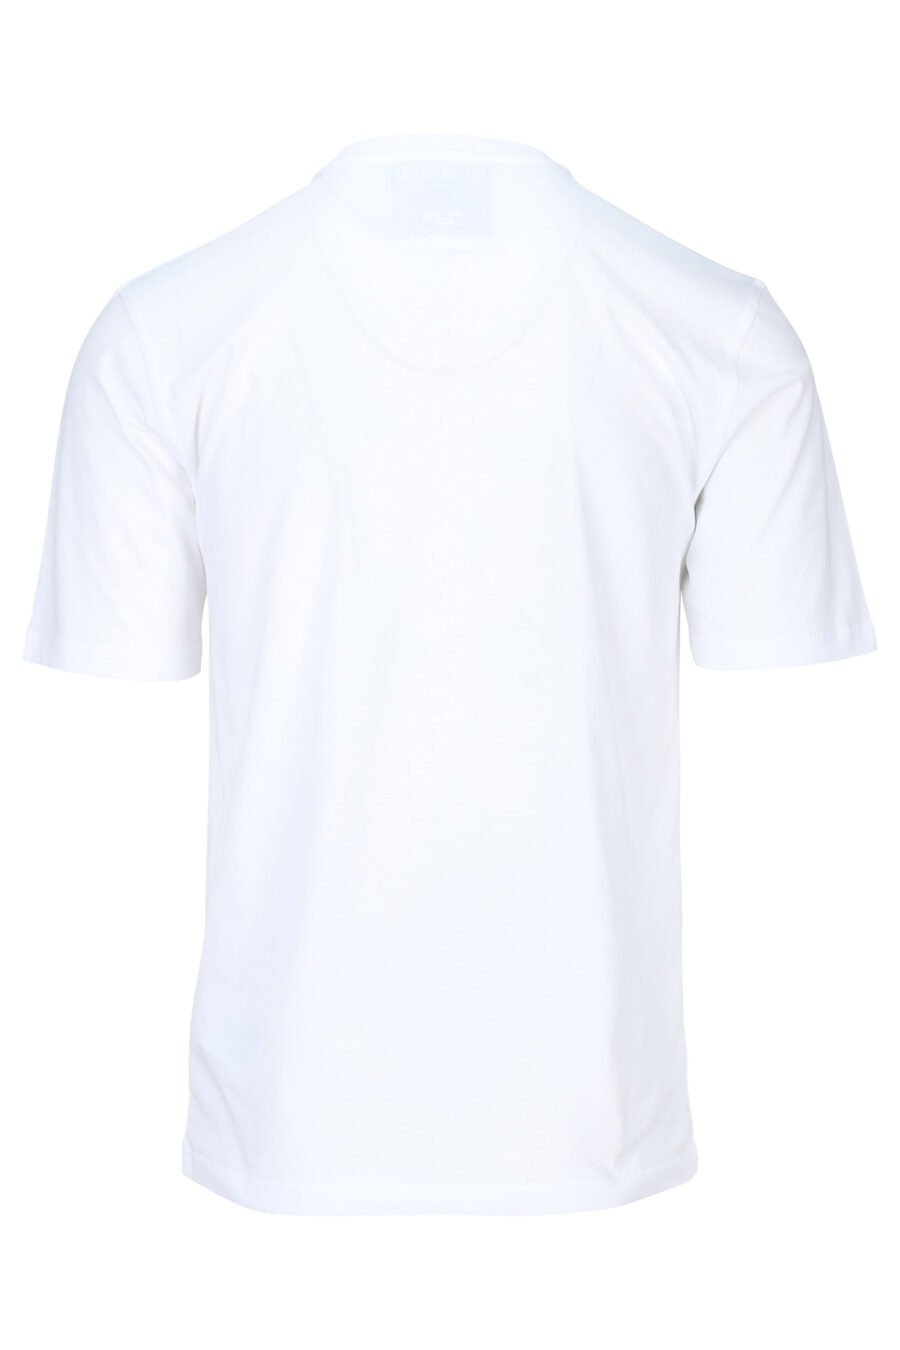 Camiseta blanca con minilogo "teddy sastre" - 667113124889 1